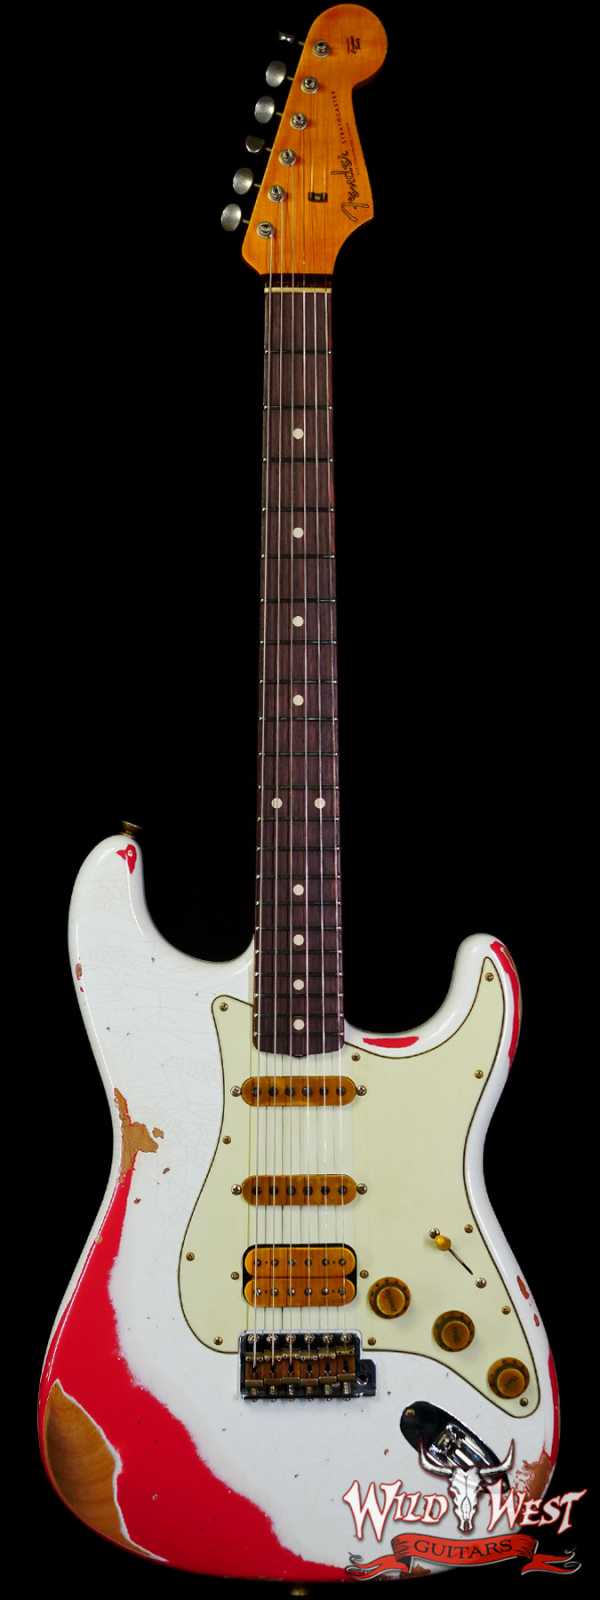 Fender Custom Shop Wild West White Lightning 2.0 Stratocaster HSS Rosewood Board 21 Frets Heavy Relic Fiesta Red